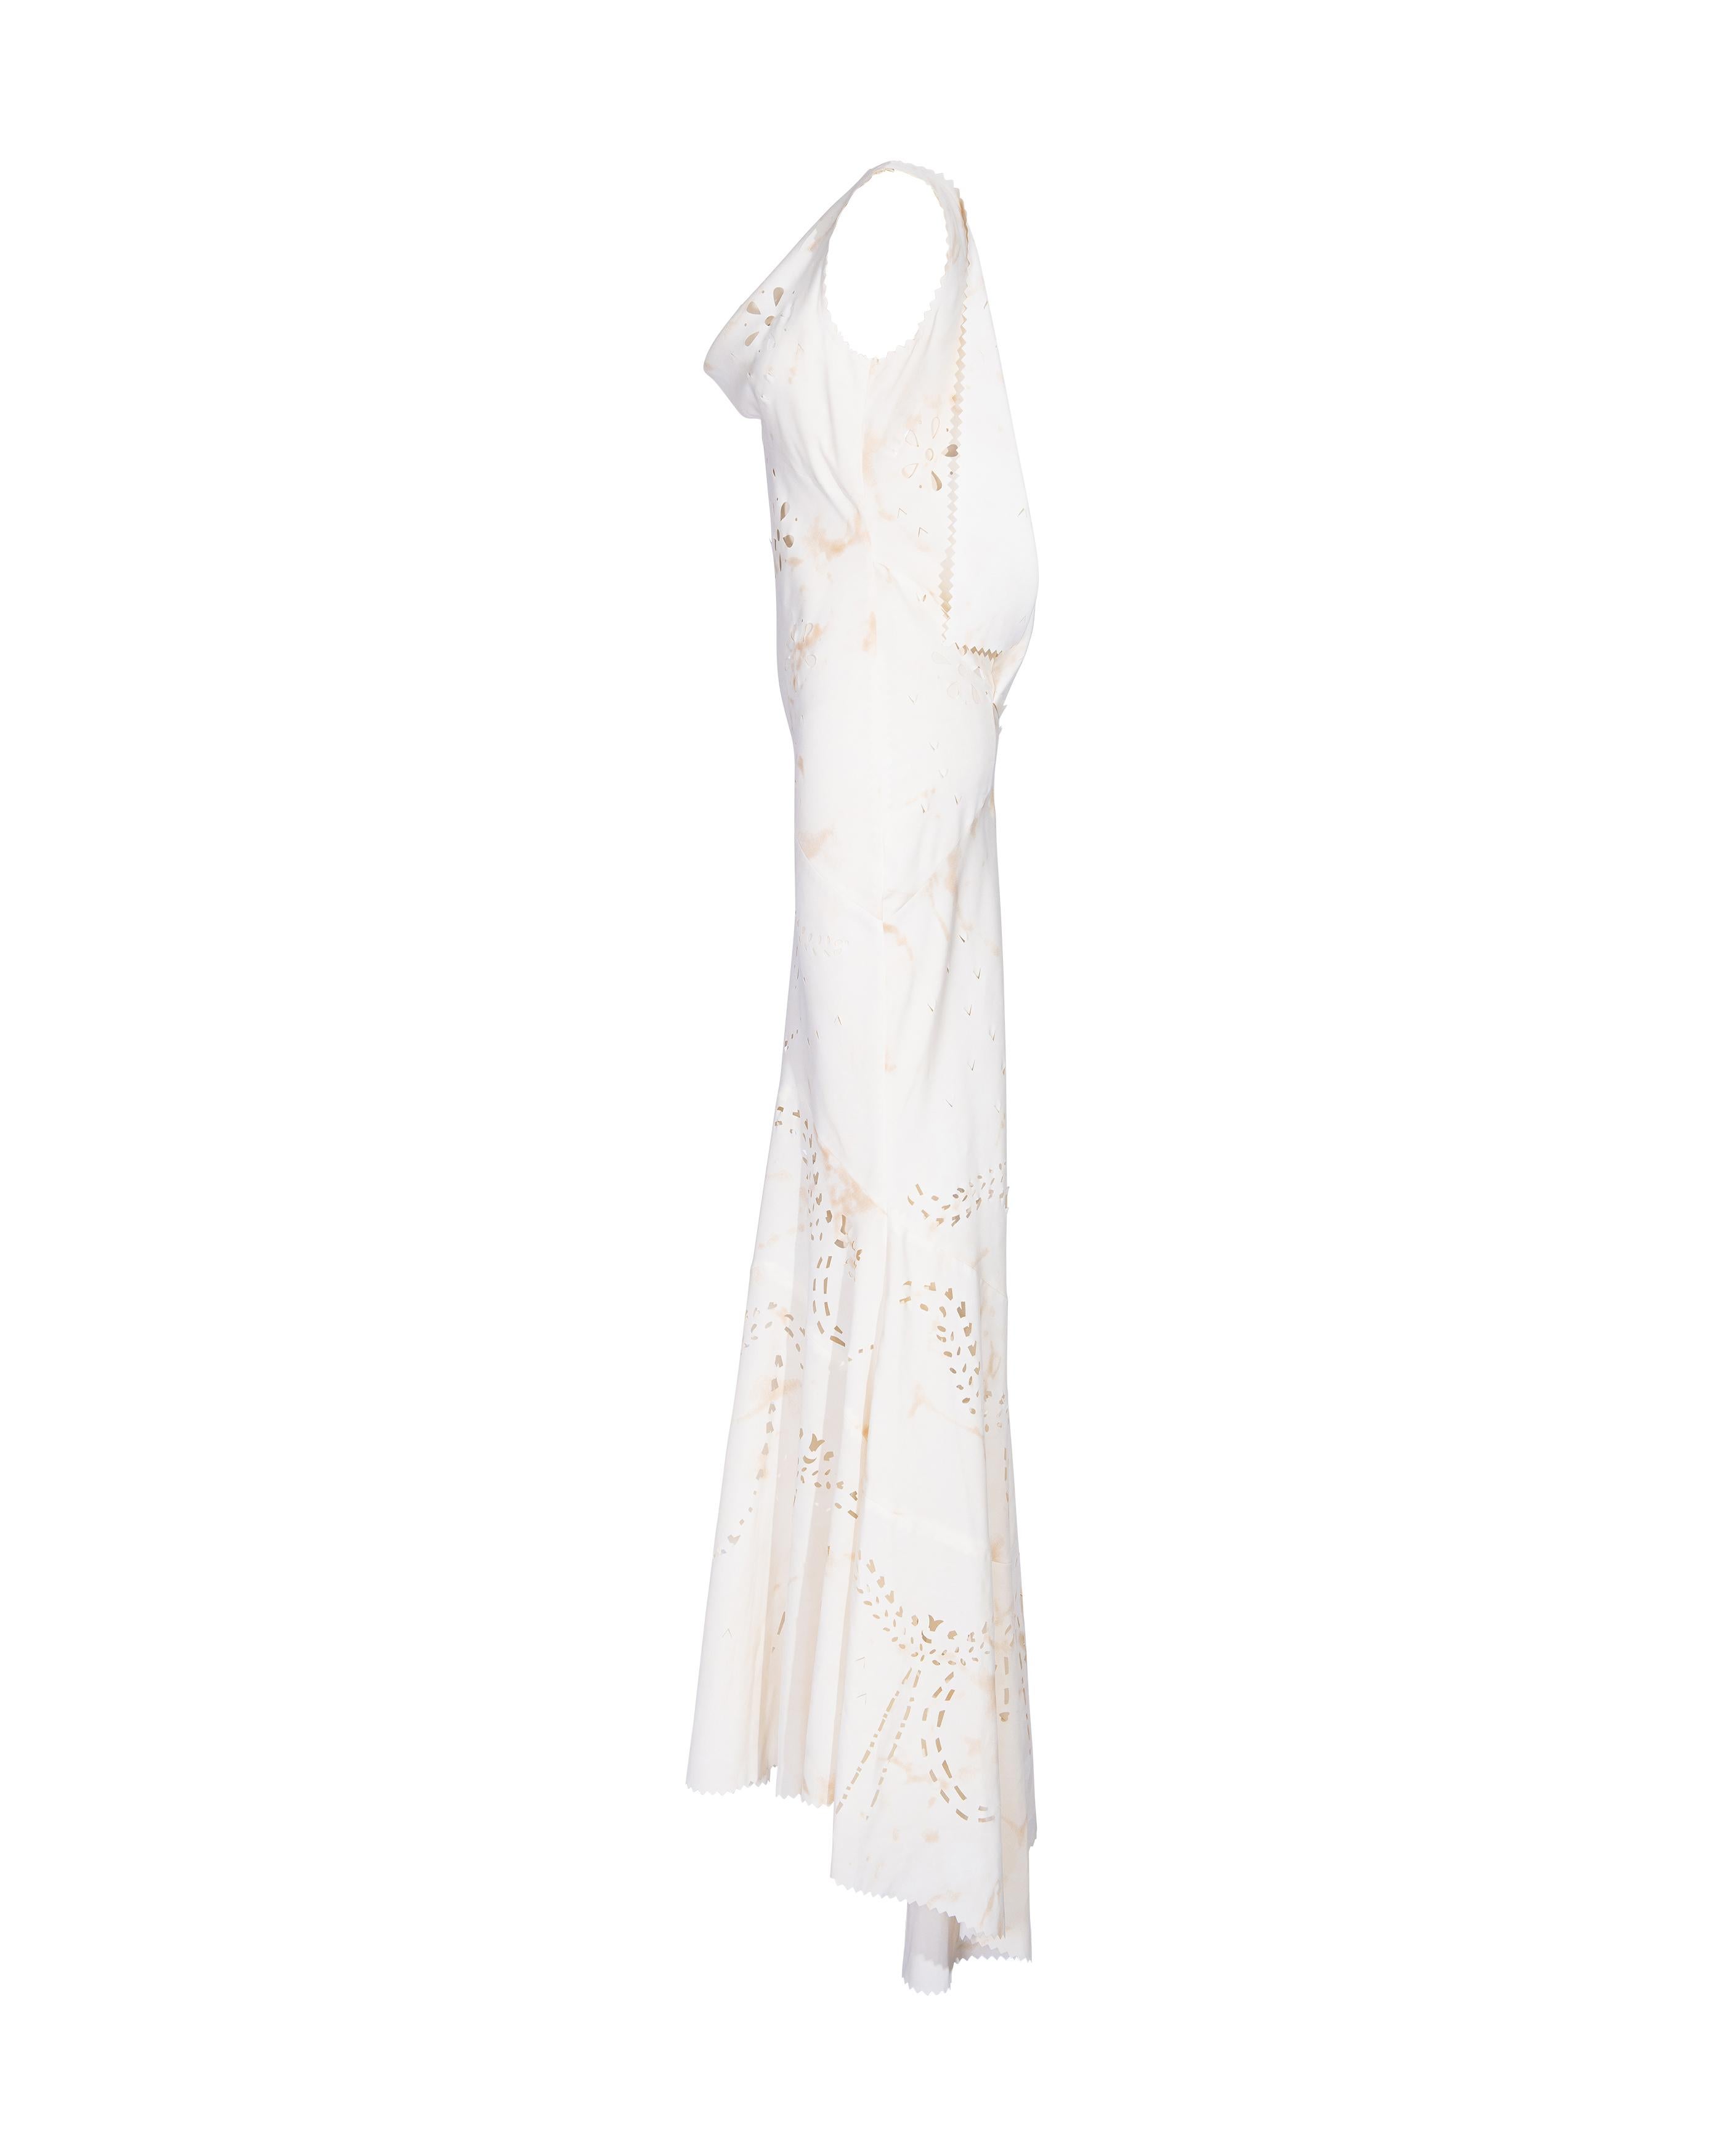 A/W 2001 John Galliano Bias Cut Cream Gown with Lasercut Floral Details 5